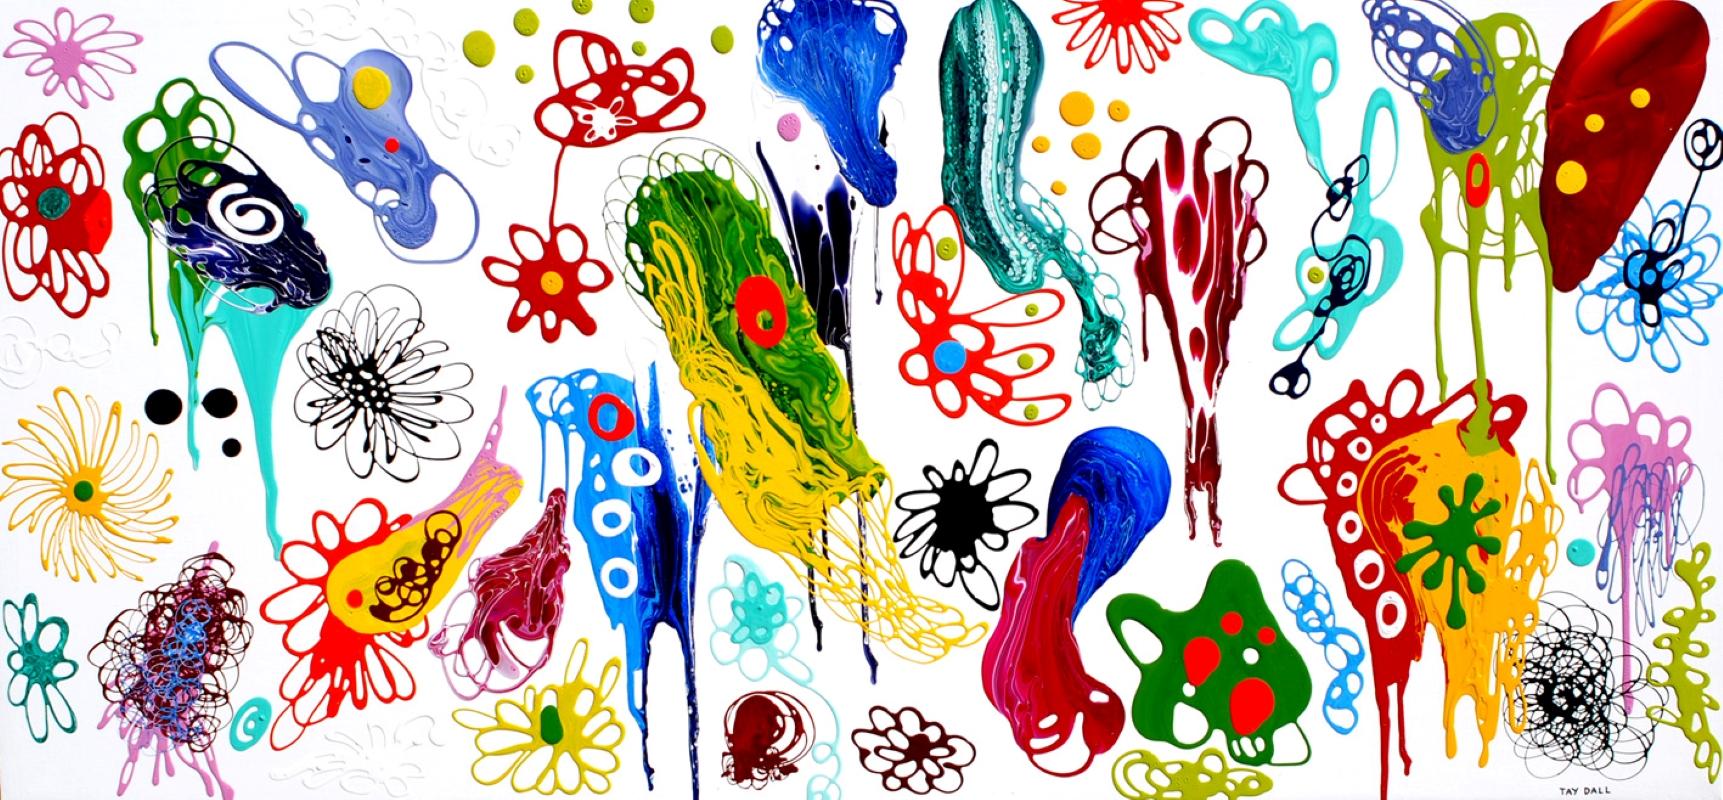 Tay Dall Abstract Painting – Großes farbenfrohes abstraktes Gemälde aus gegossener Emaille „Atom schimmert über dem Oberteil“